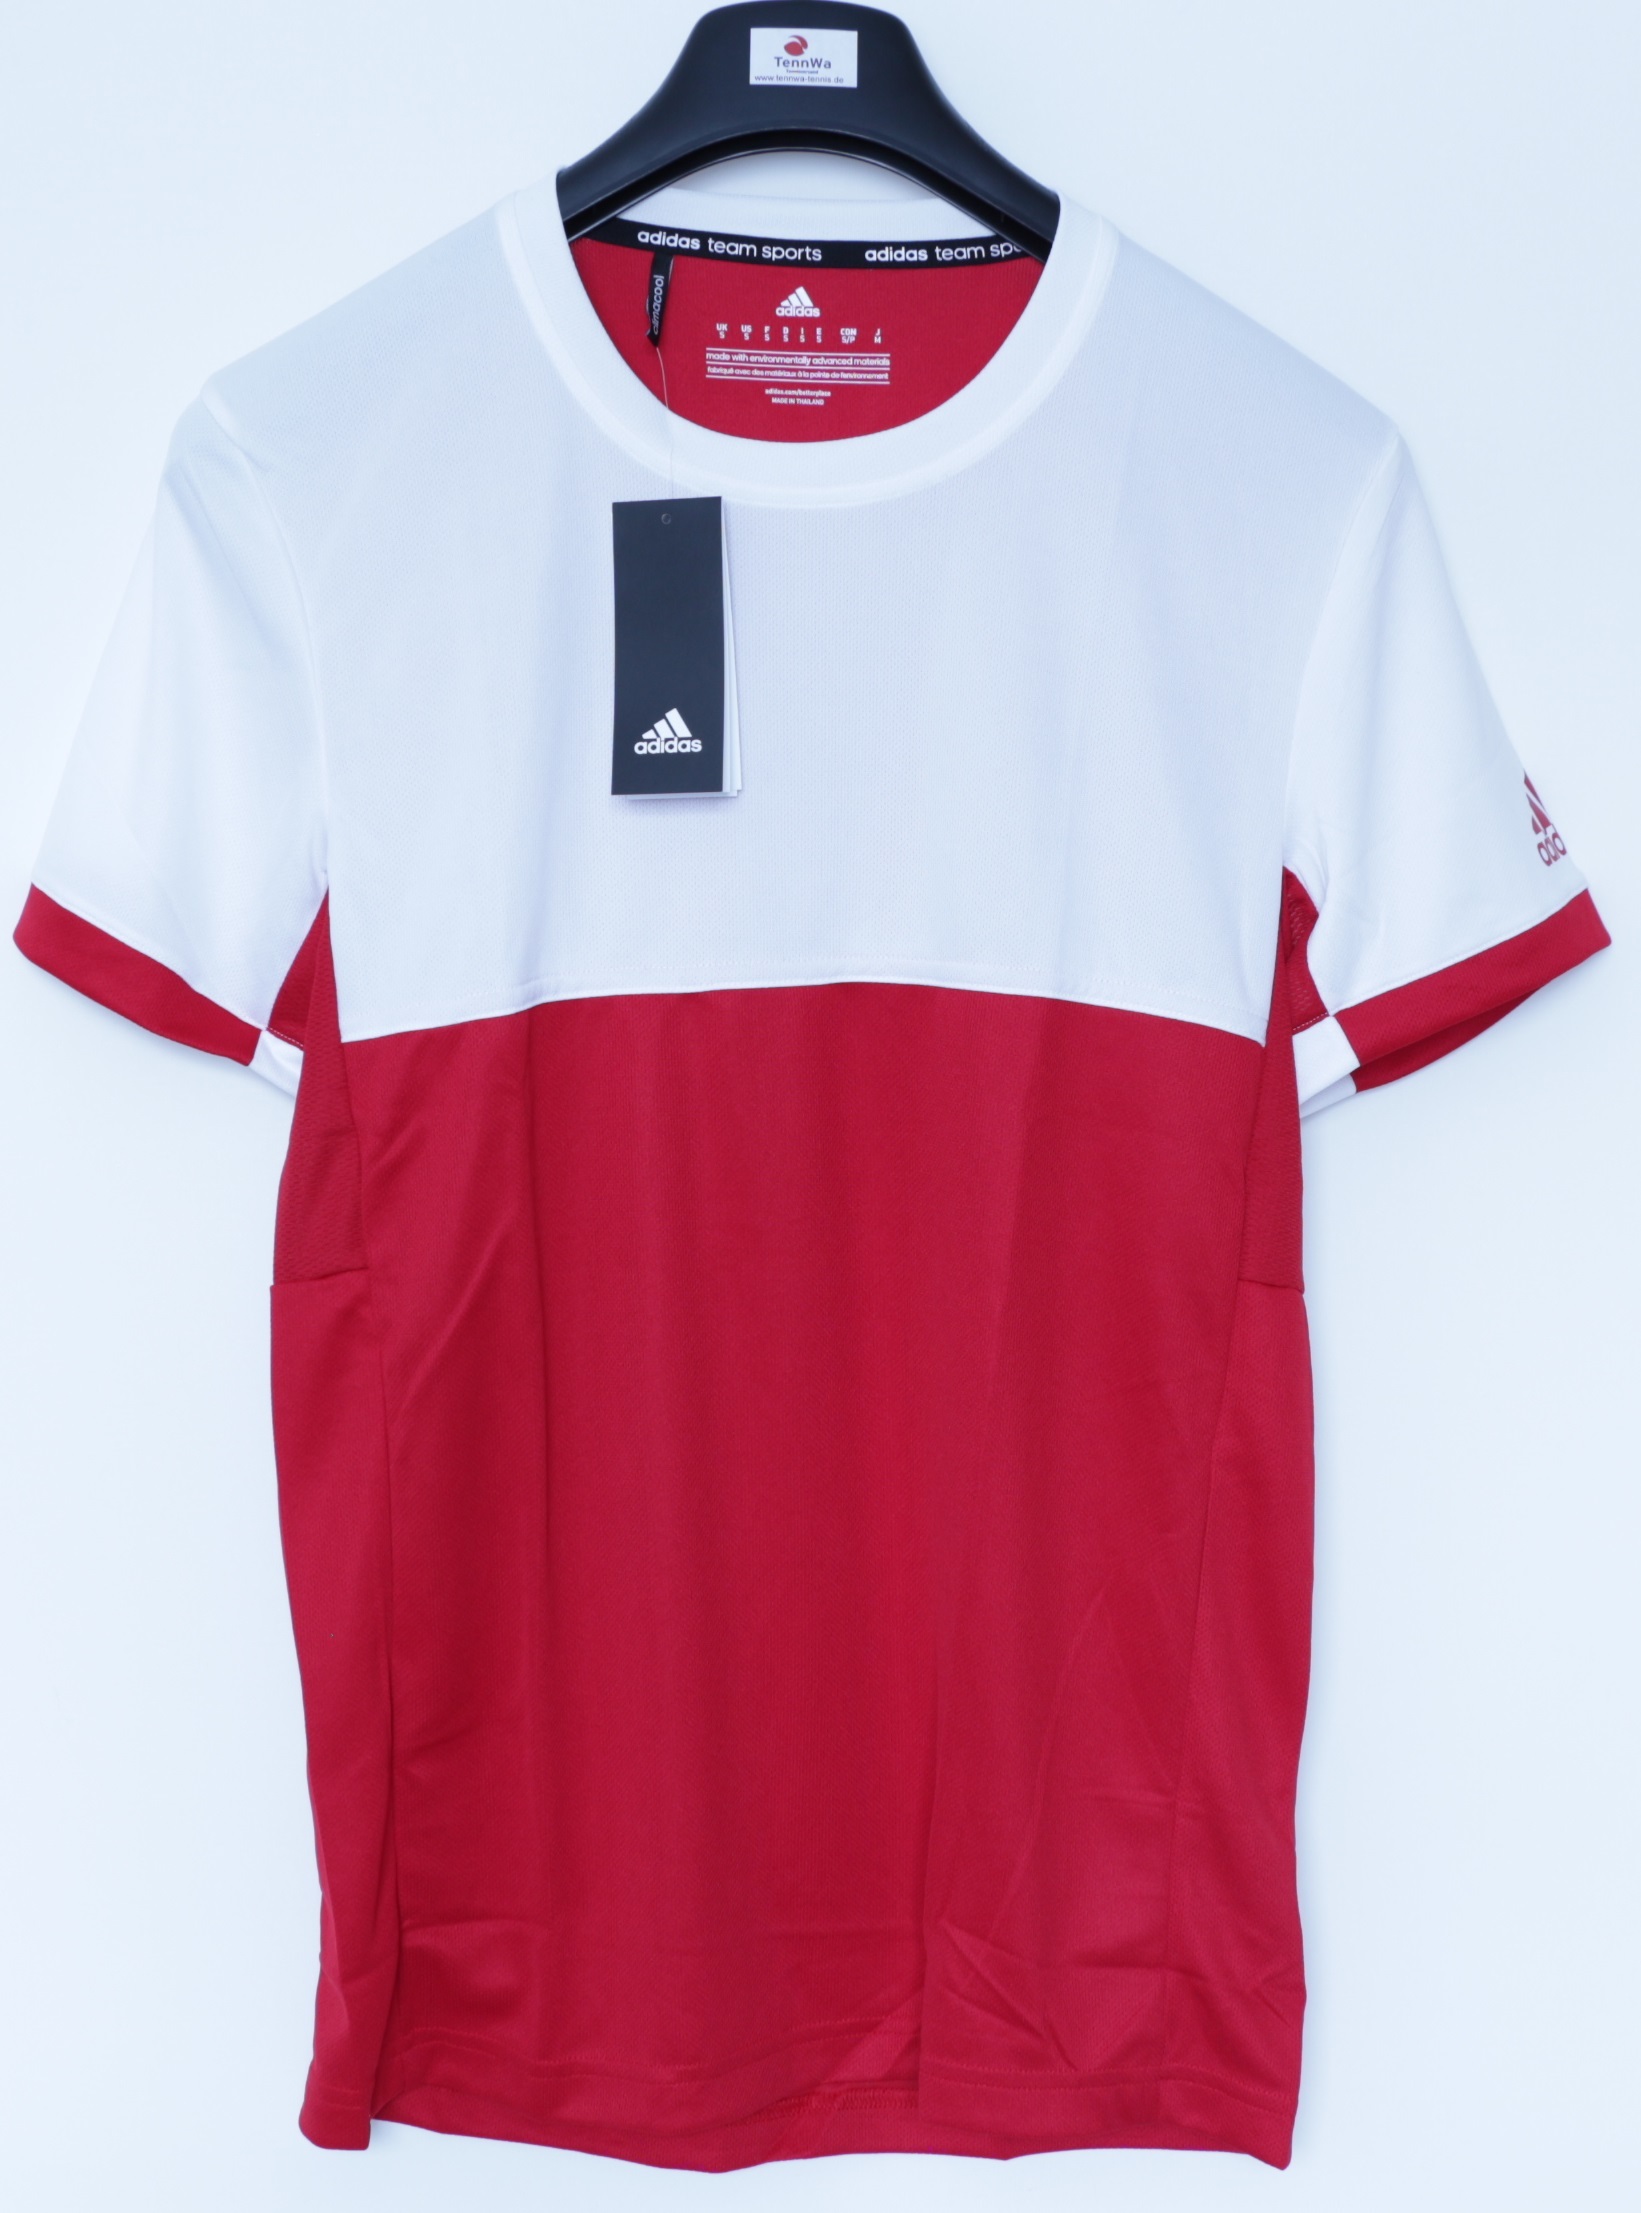 Adidas T16 T-Shirt Herren weiß/rot